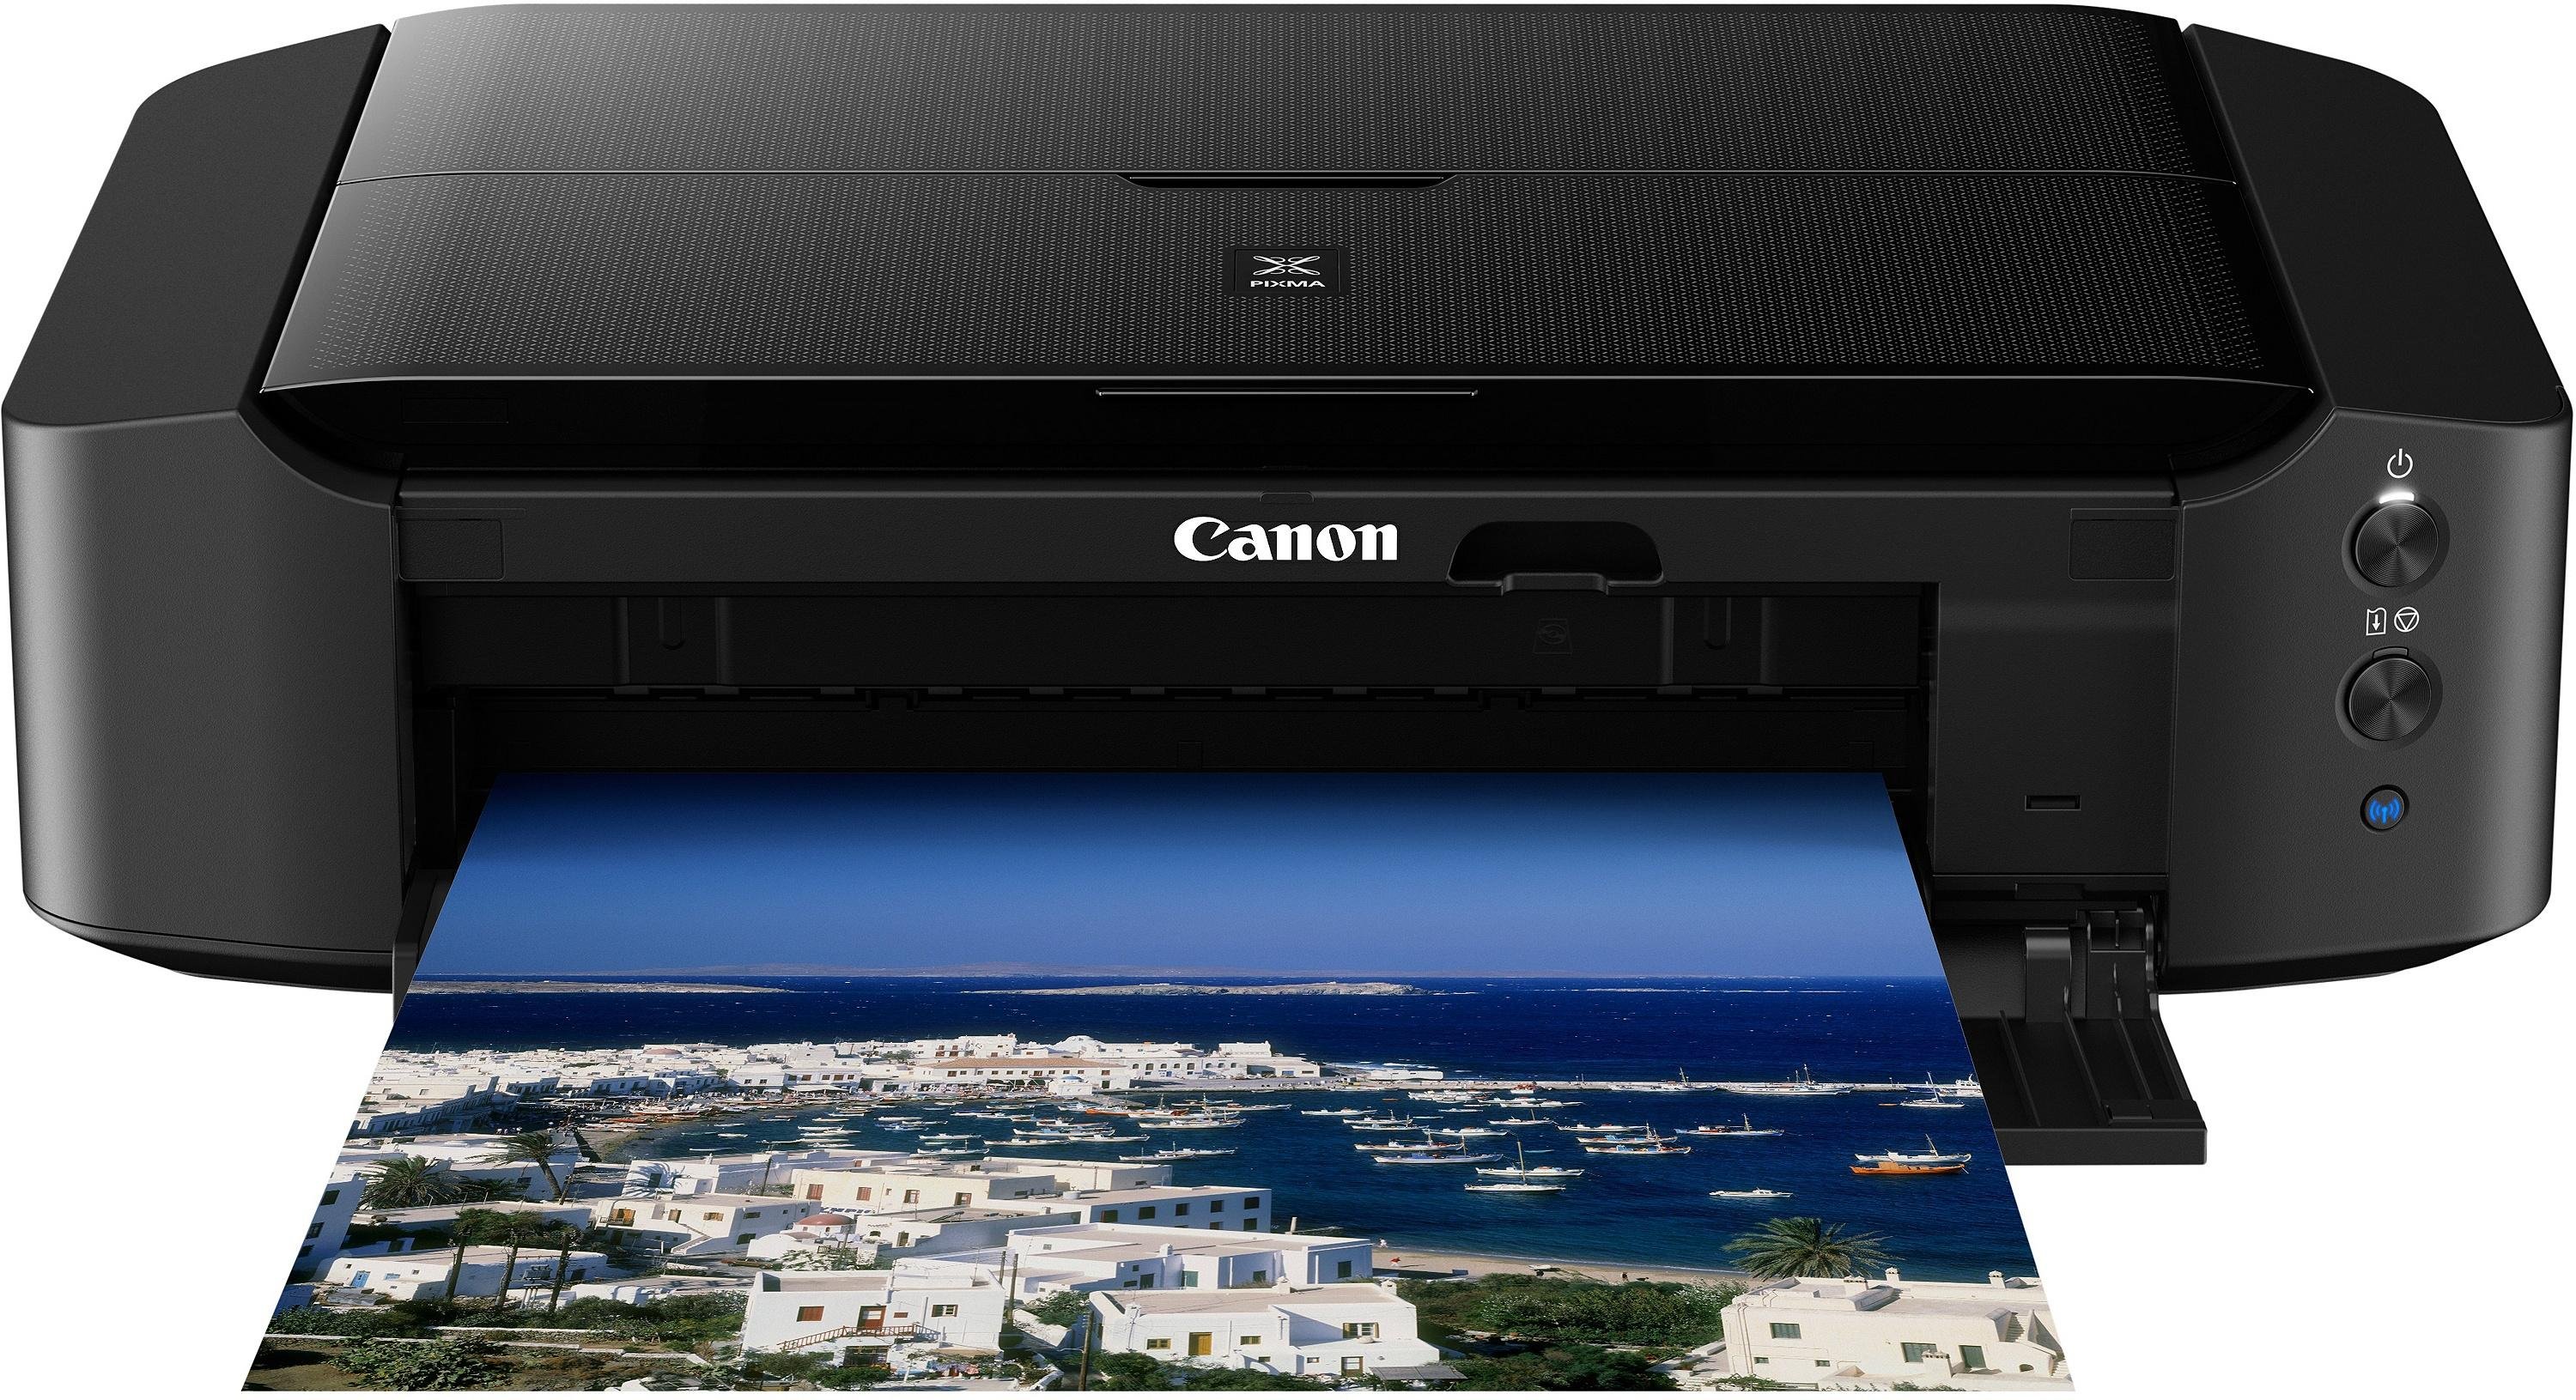 Canon PIXMA iP8750 A3+ Wi-Fi Photo Printer